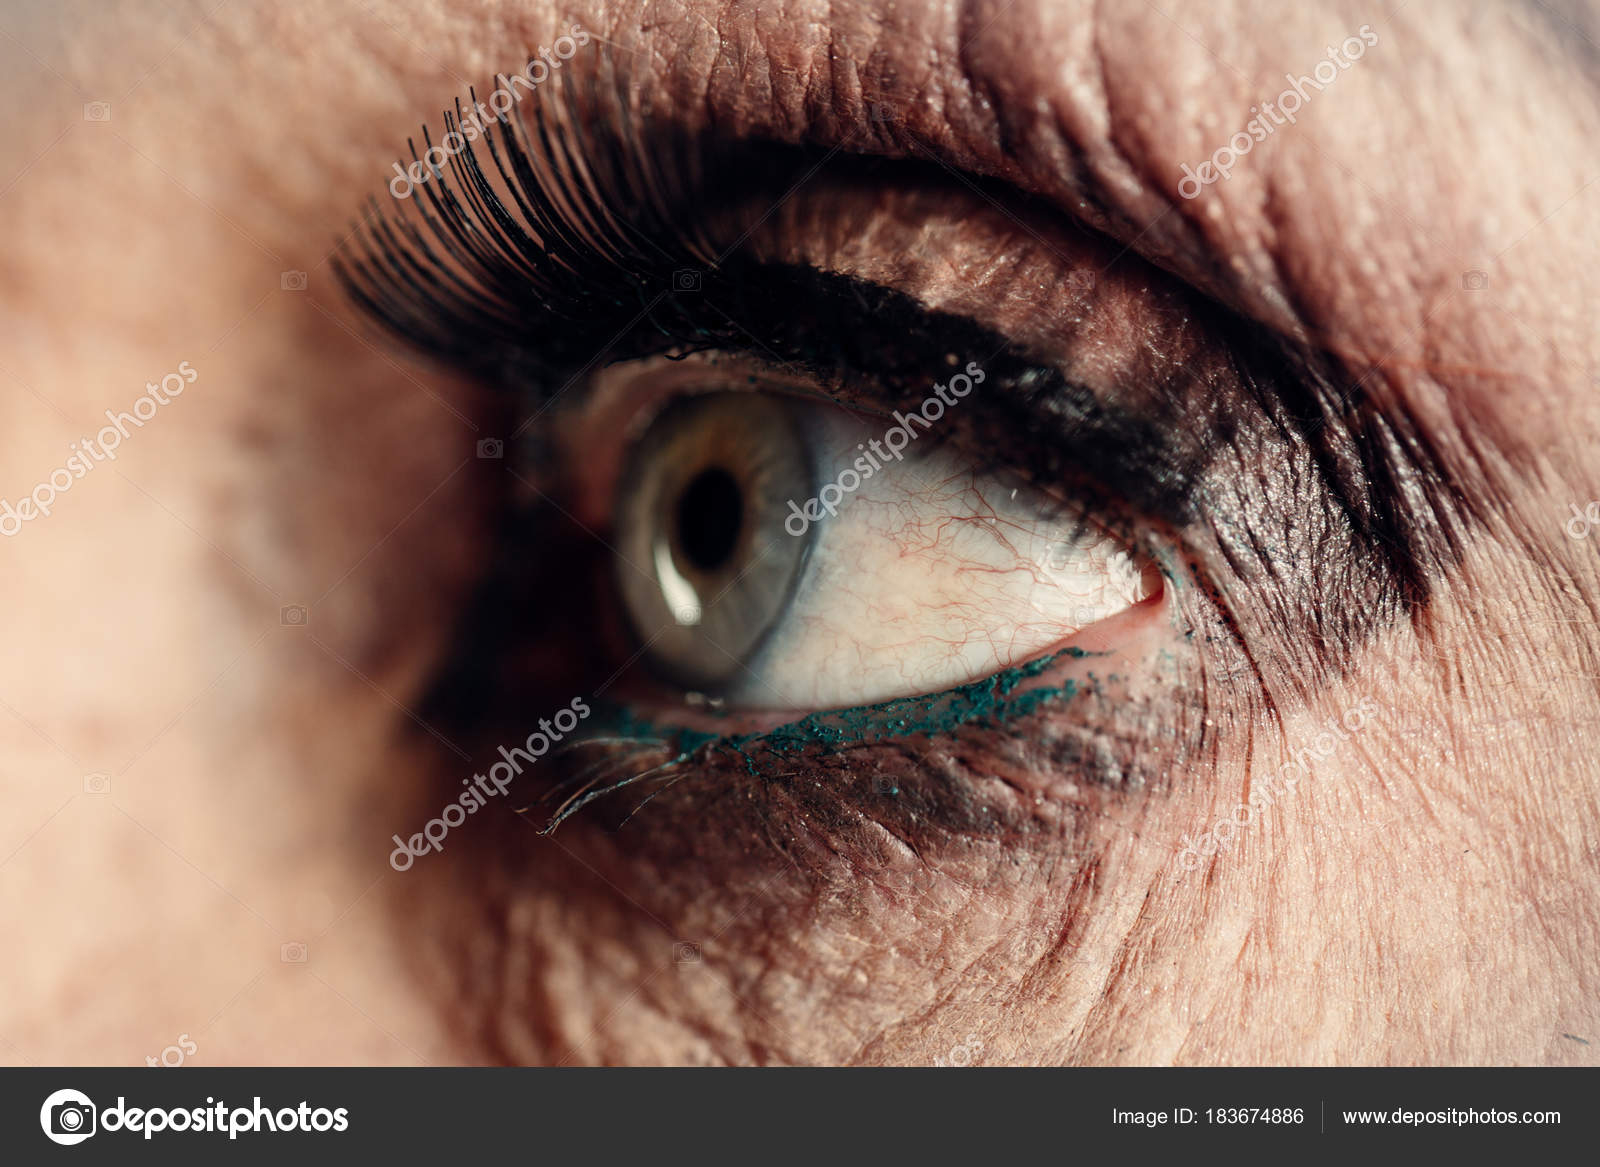 Eye Makeup For Older Women Old Woman Eye Makeup Older Women Mascara Blue Eyes Wrinkles Stock